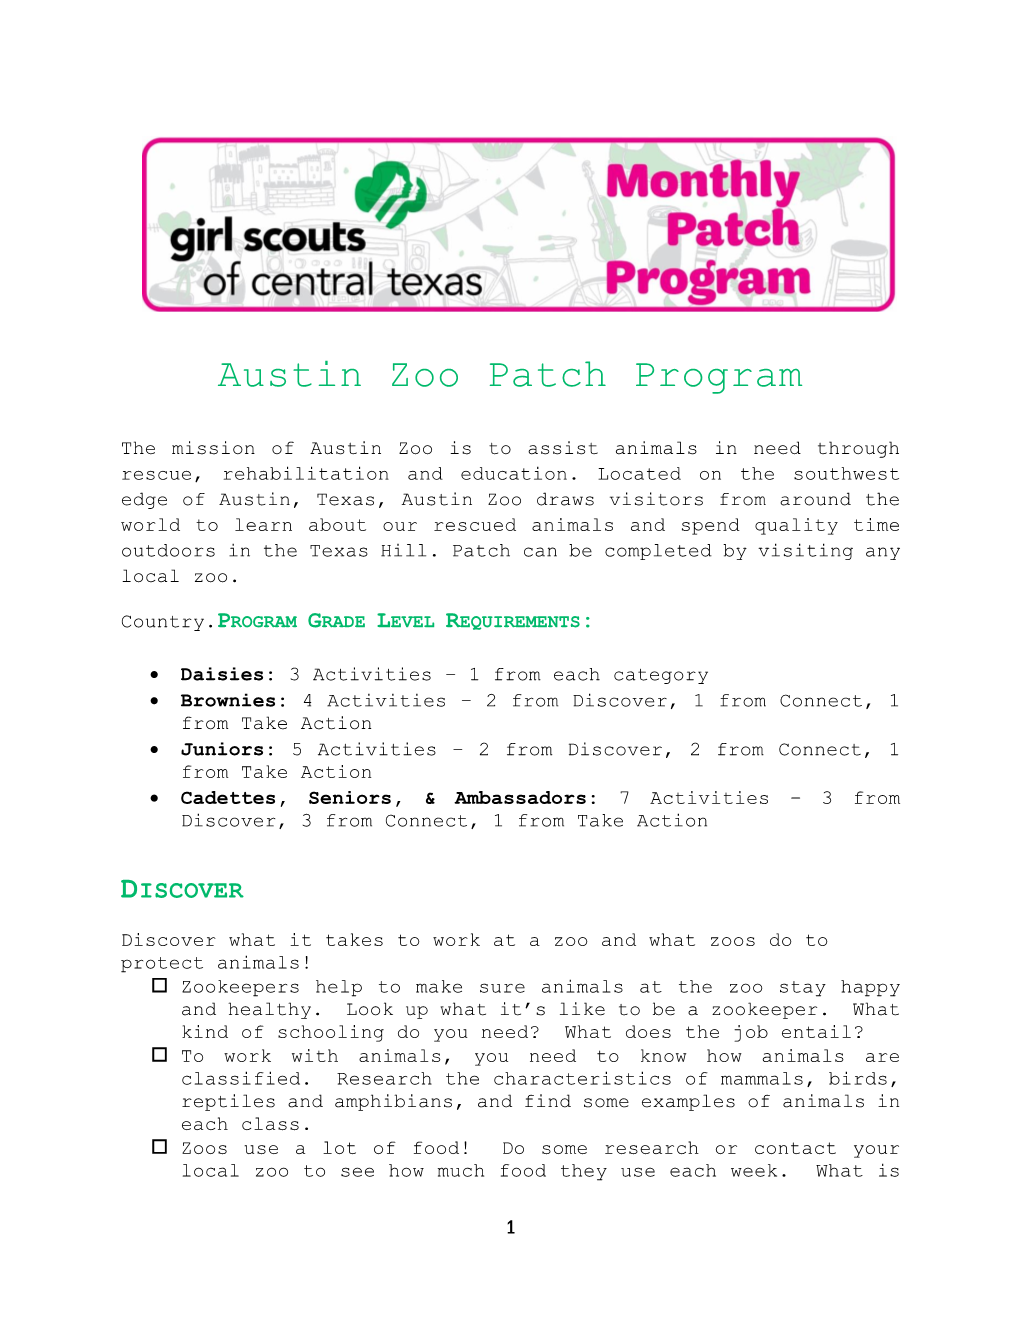 Austin Zoo Monthly Patch Program